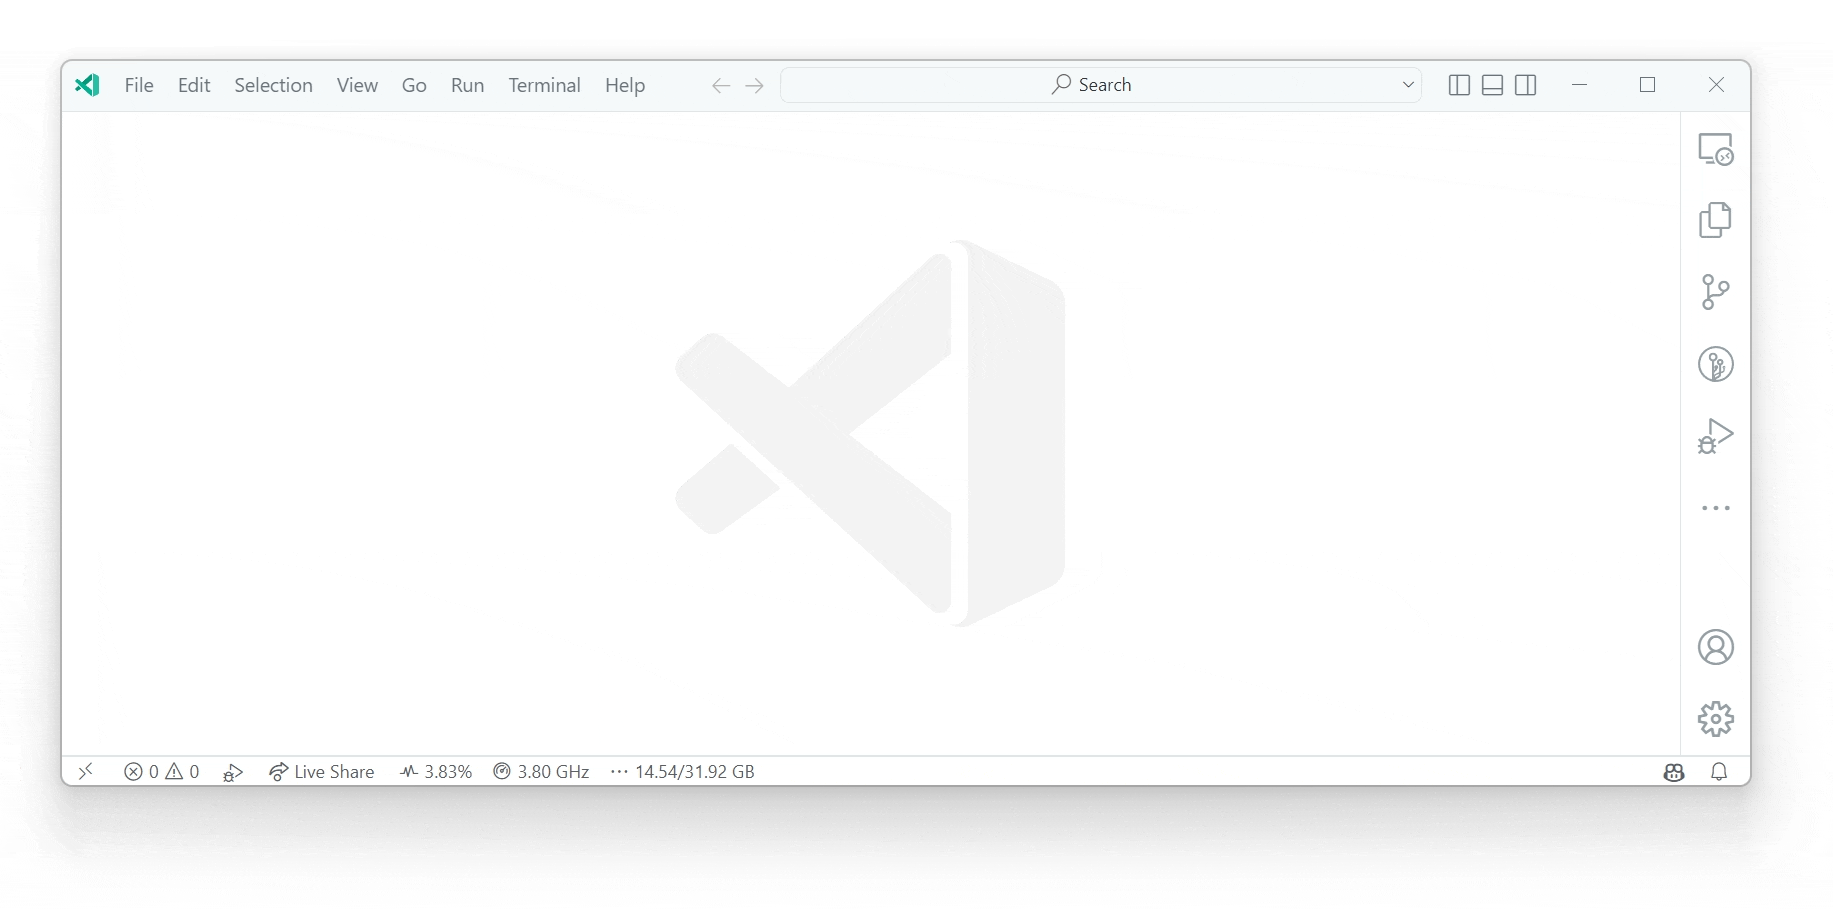 responsive menu bar folding